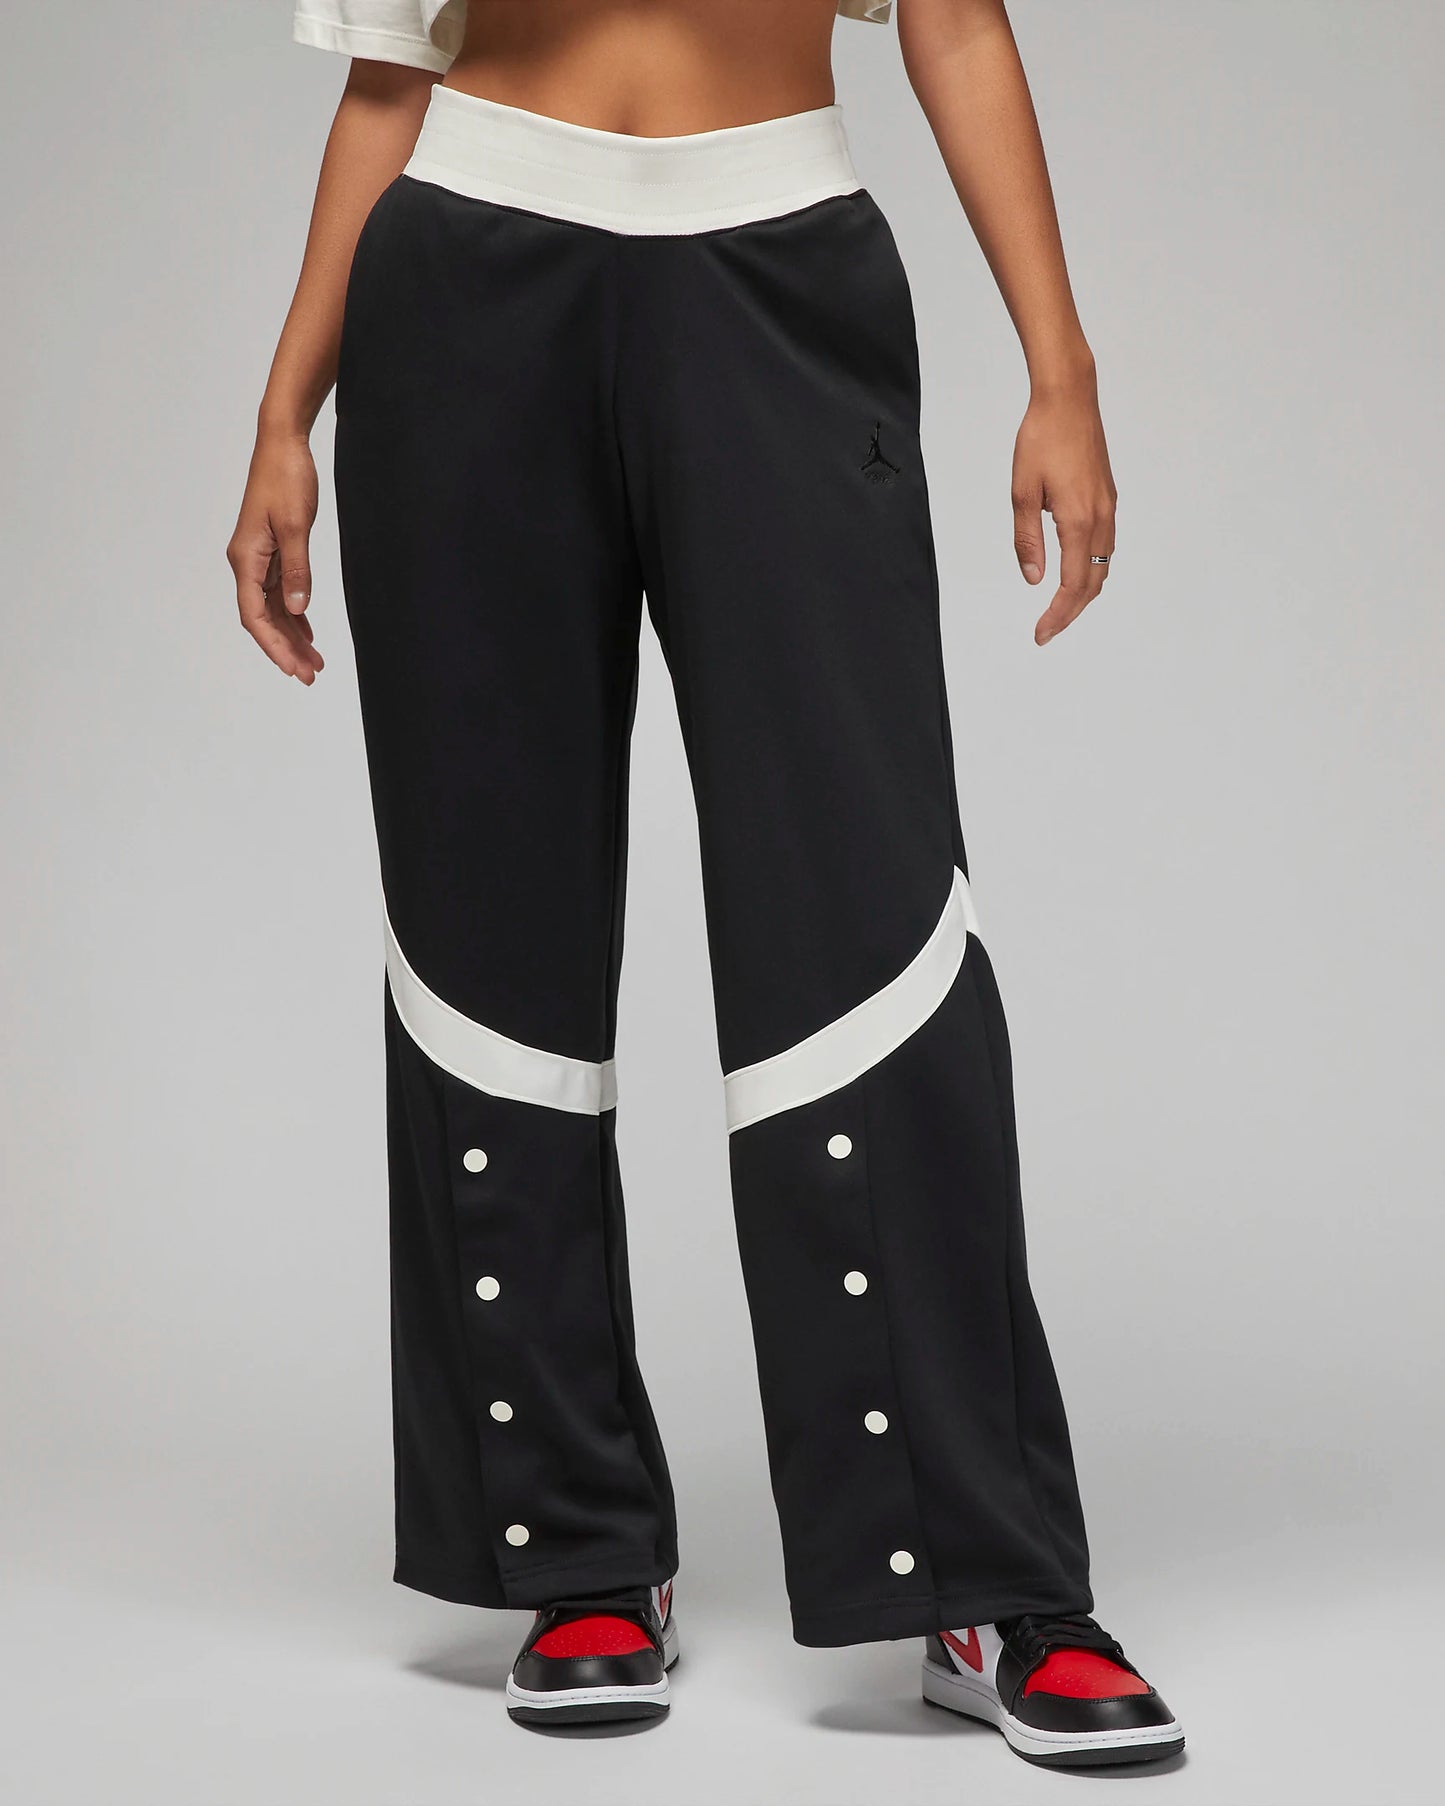 Jordan (Her)itage Women's Suit Pants "Black/Sail"